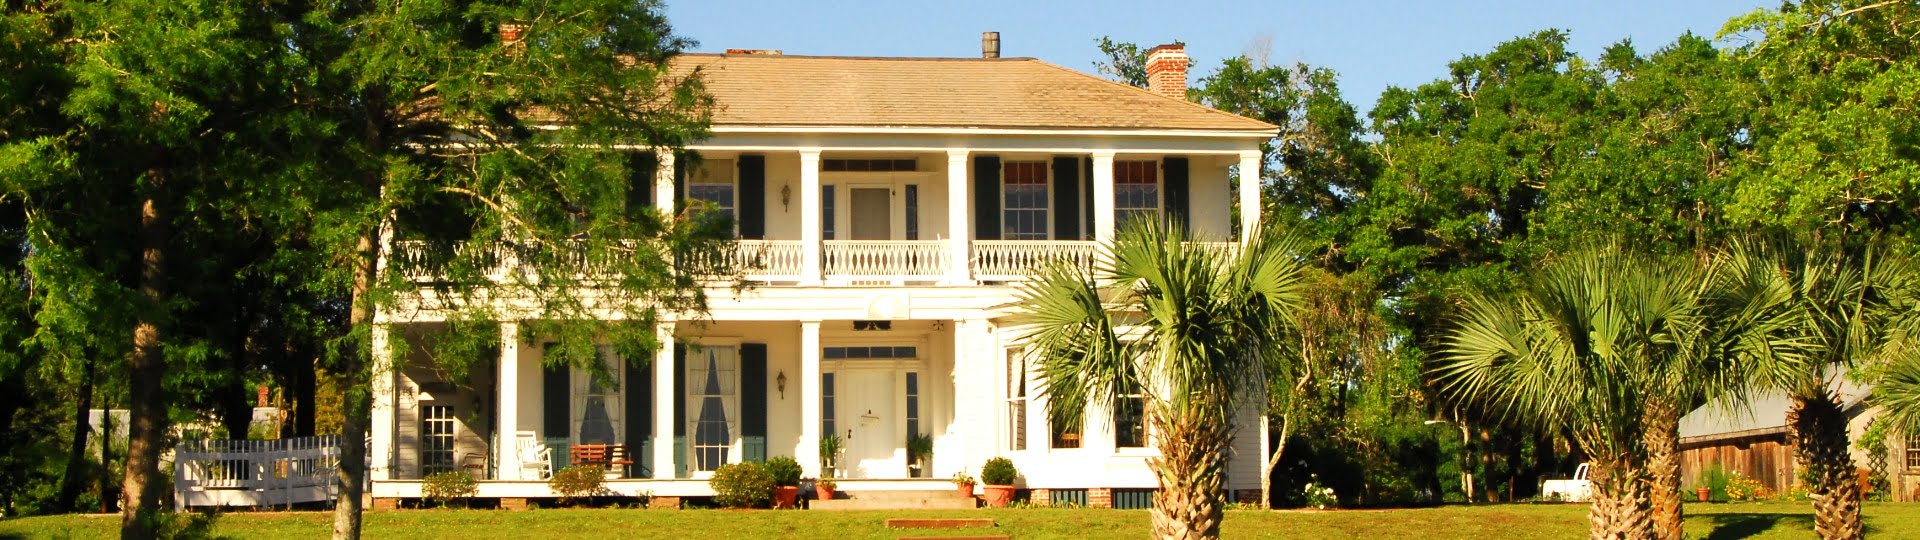 Apalachicola Orman House